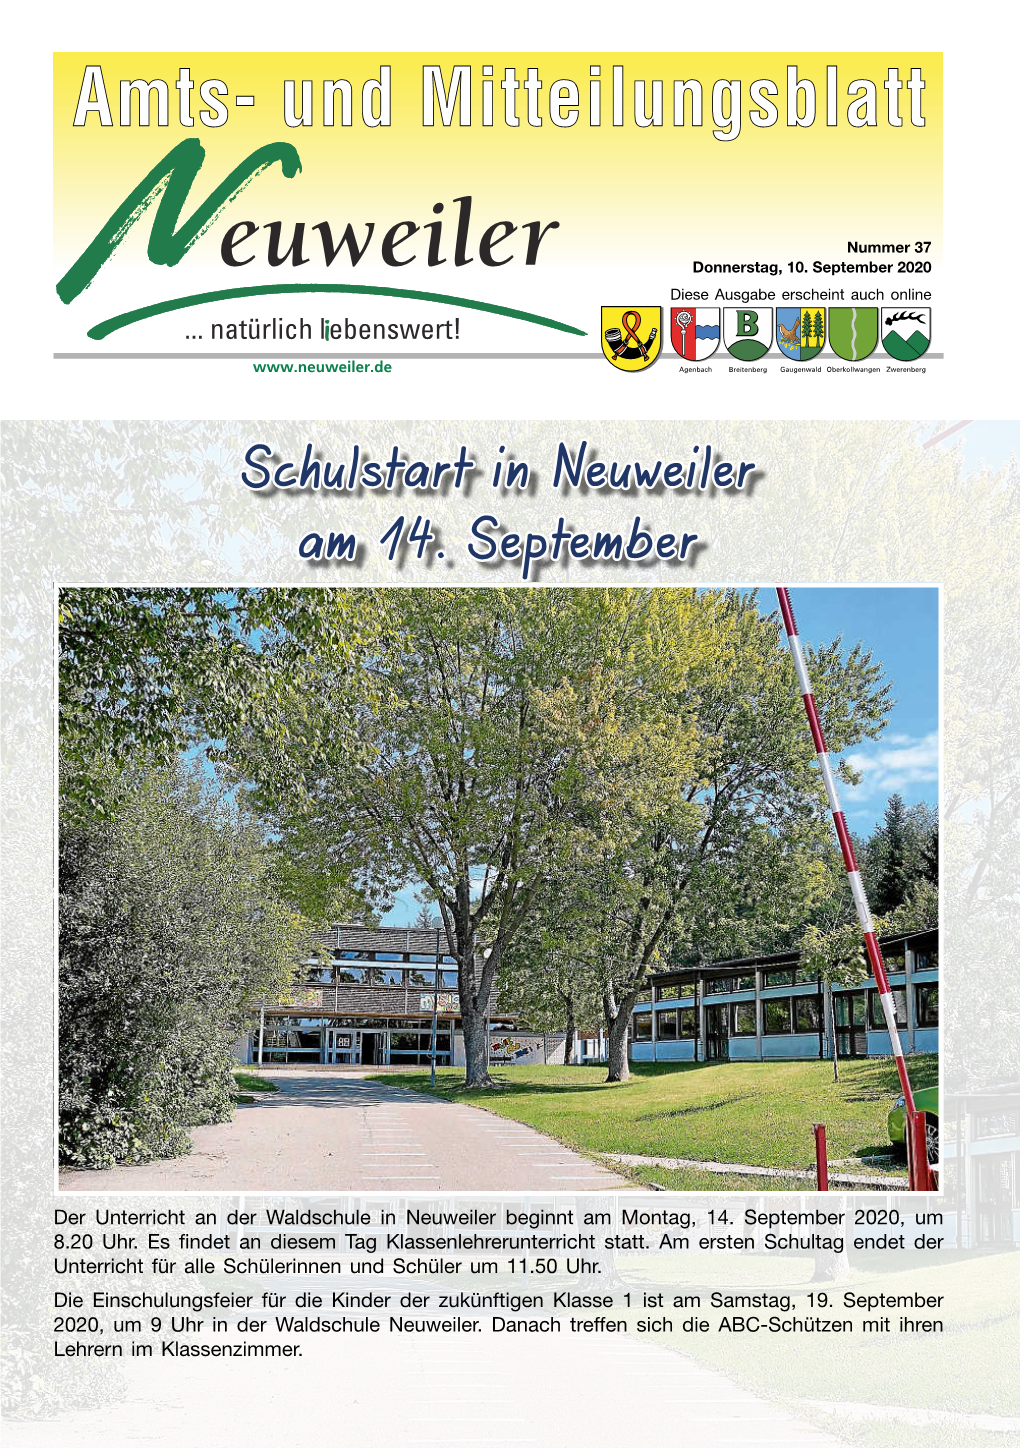 Schulstart in Neuweiler Am 14. September